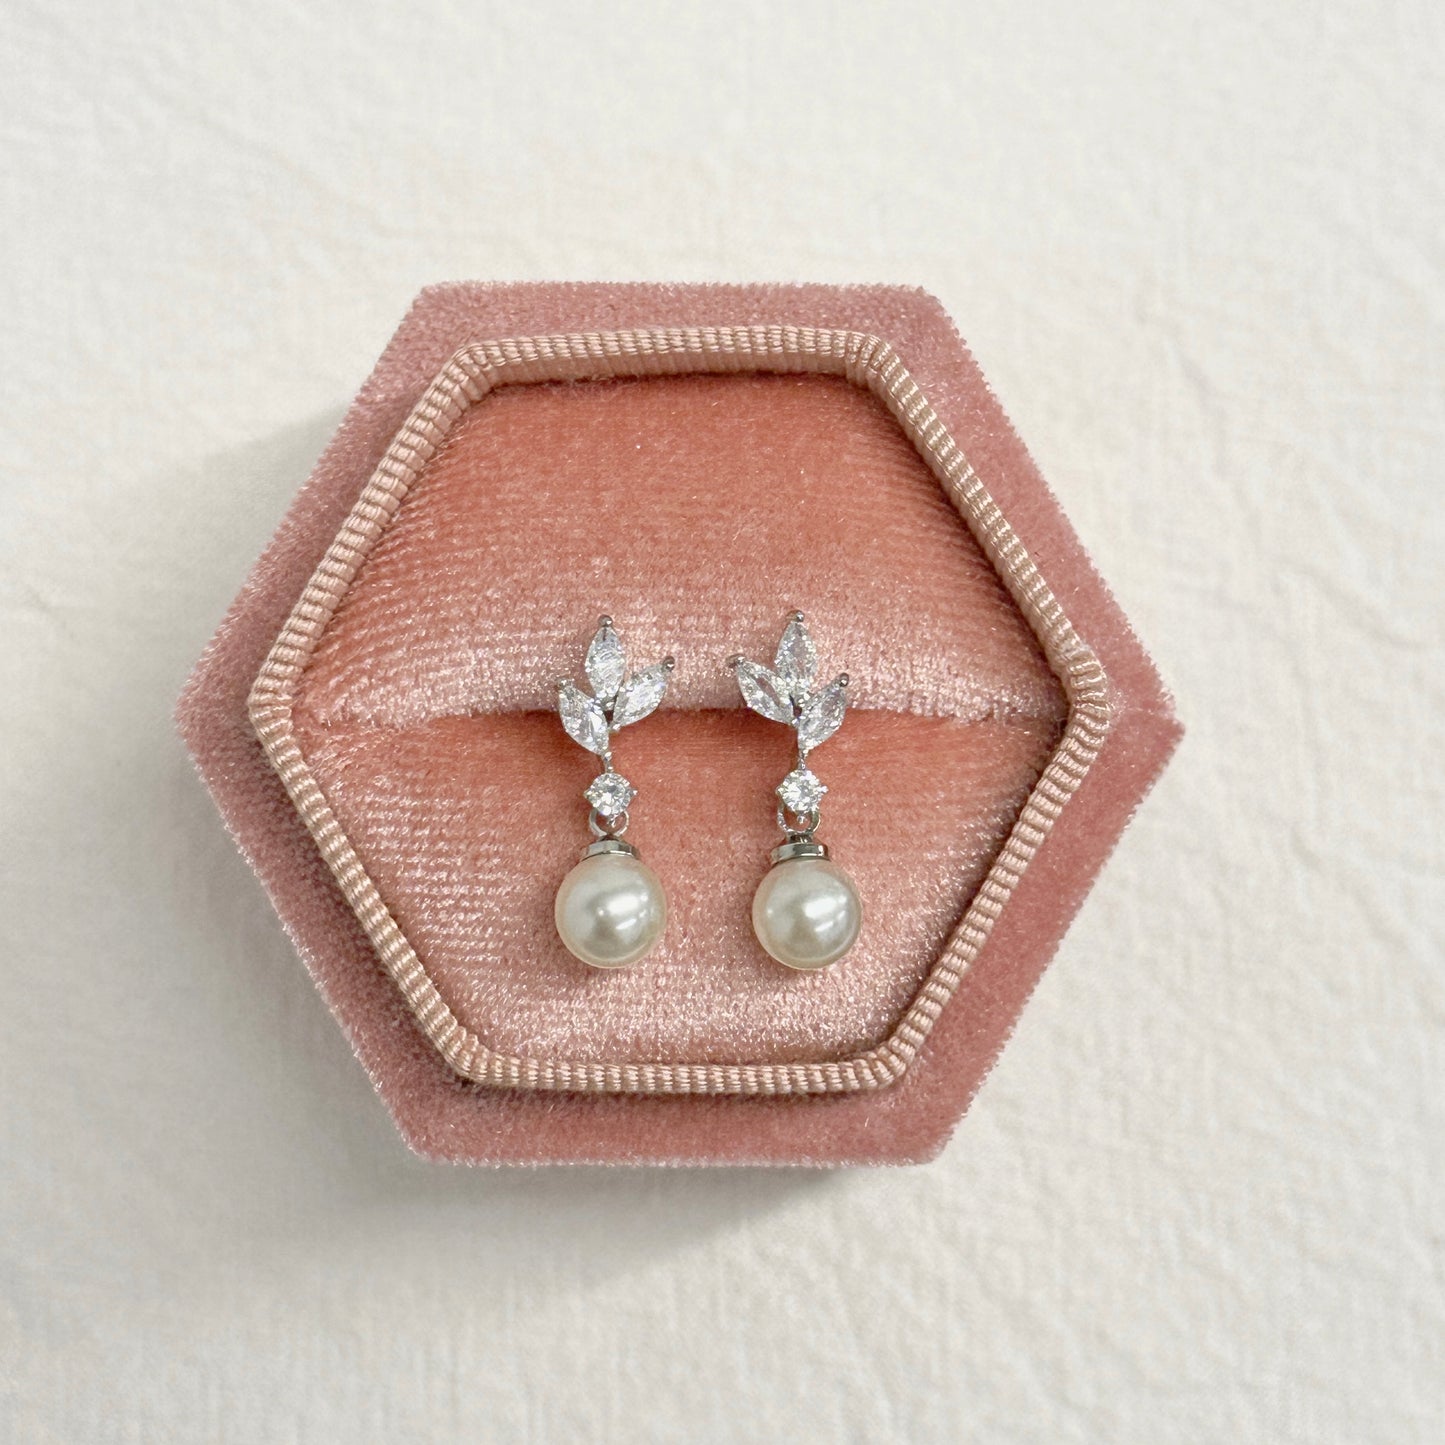 ANGELINA丨Bridal Crystal Earrings with Pearl Drop